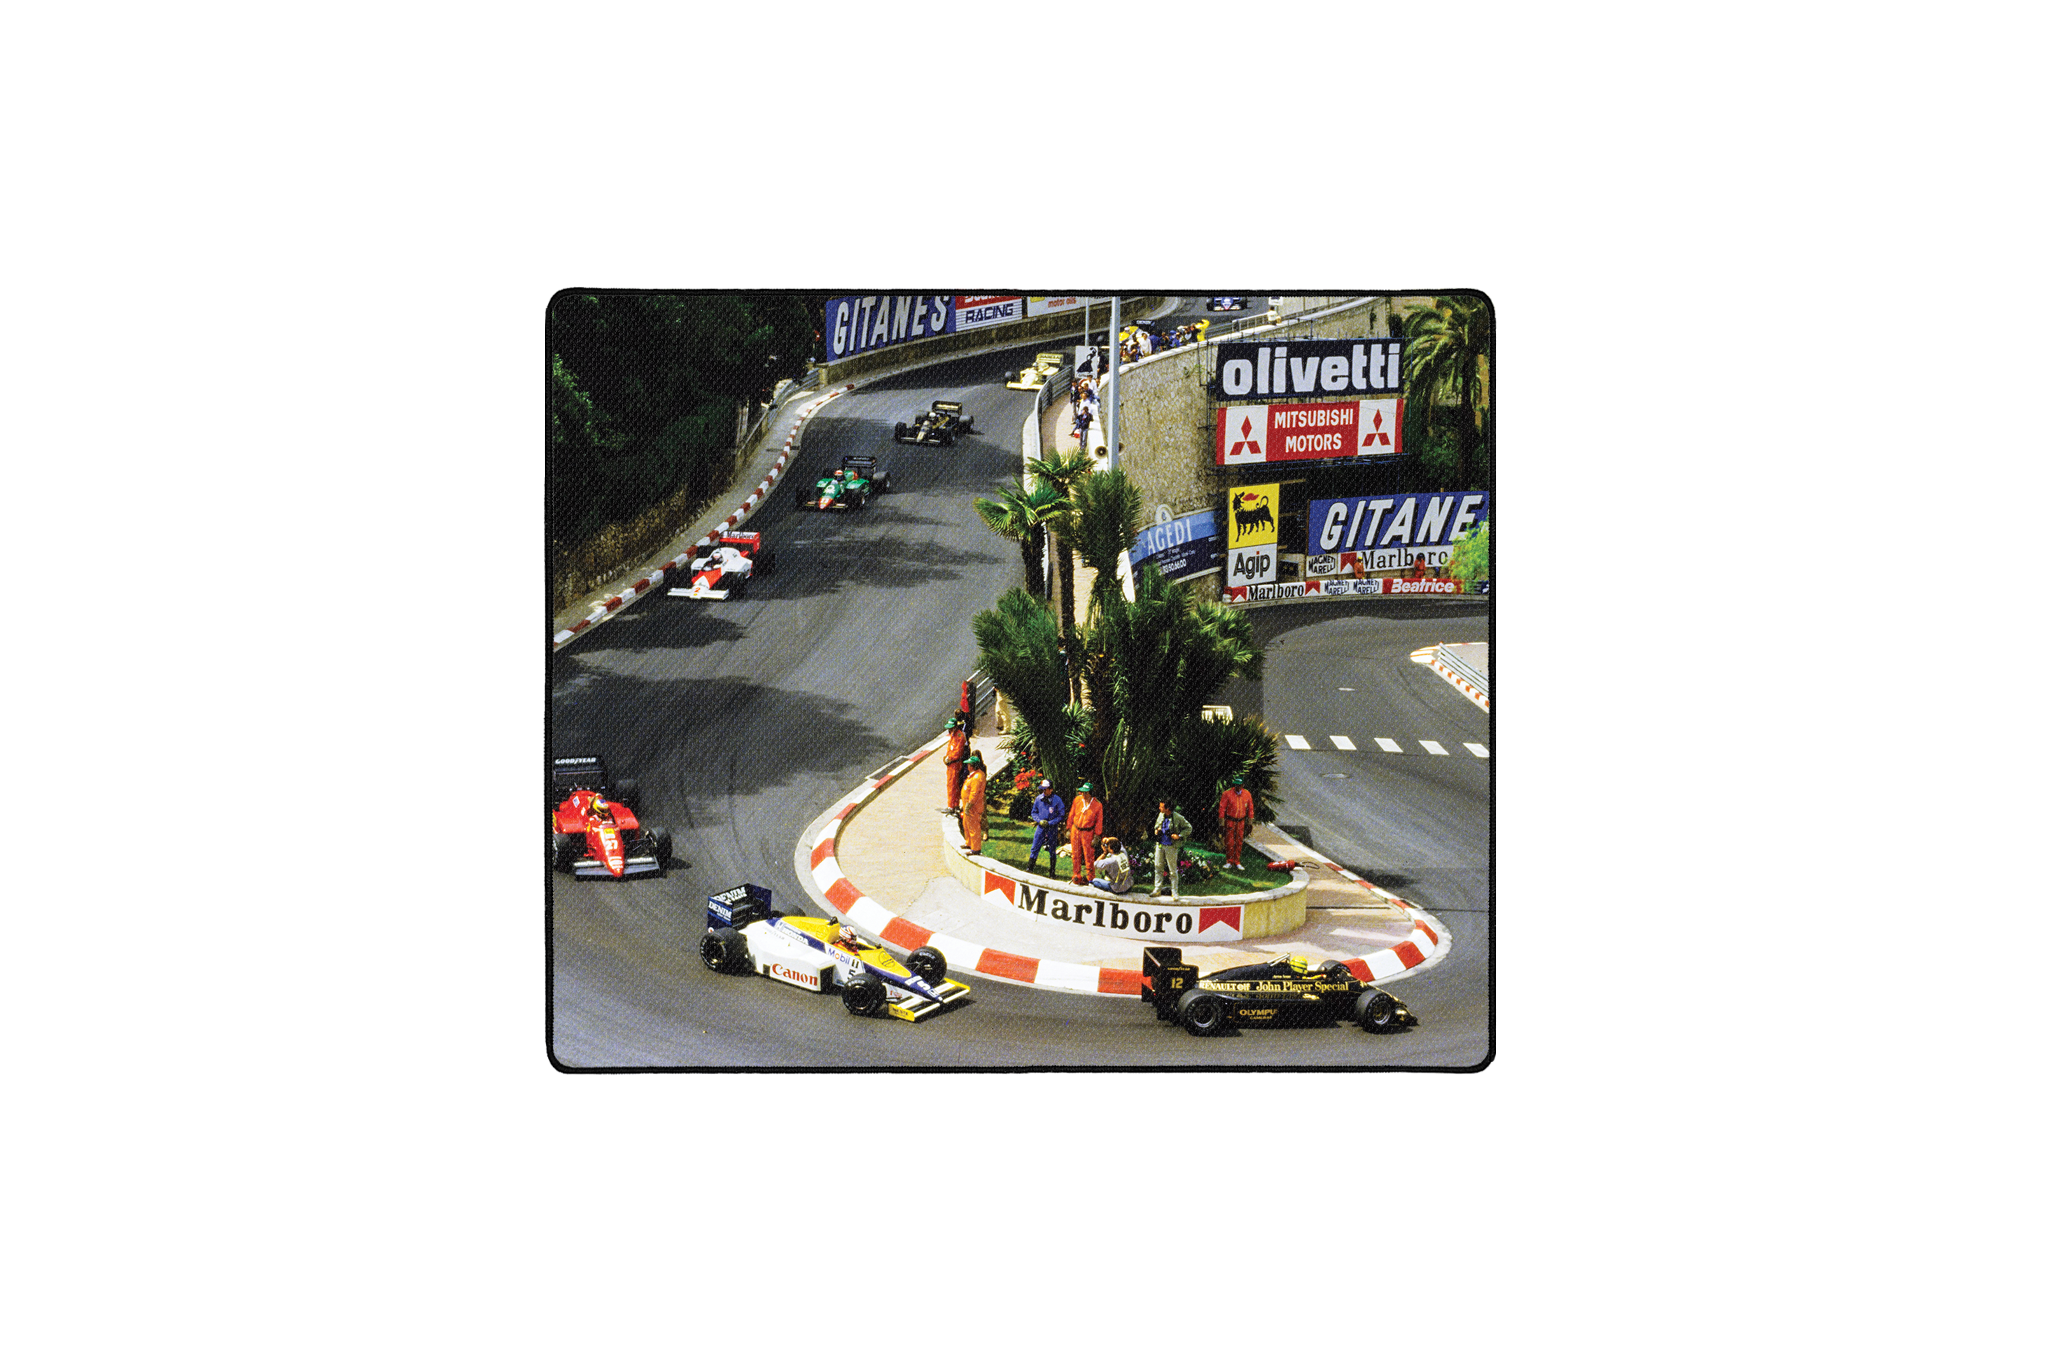 Monaco GP, '85 - The Mousepad Company